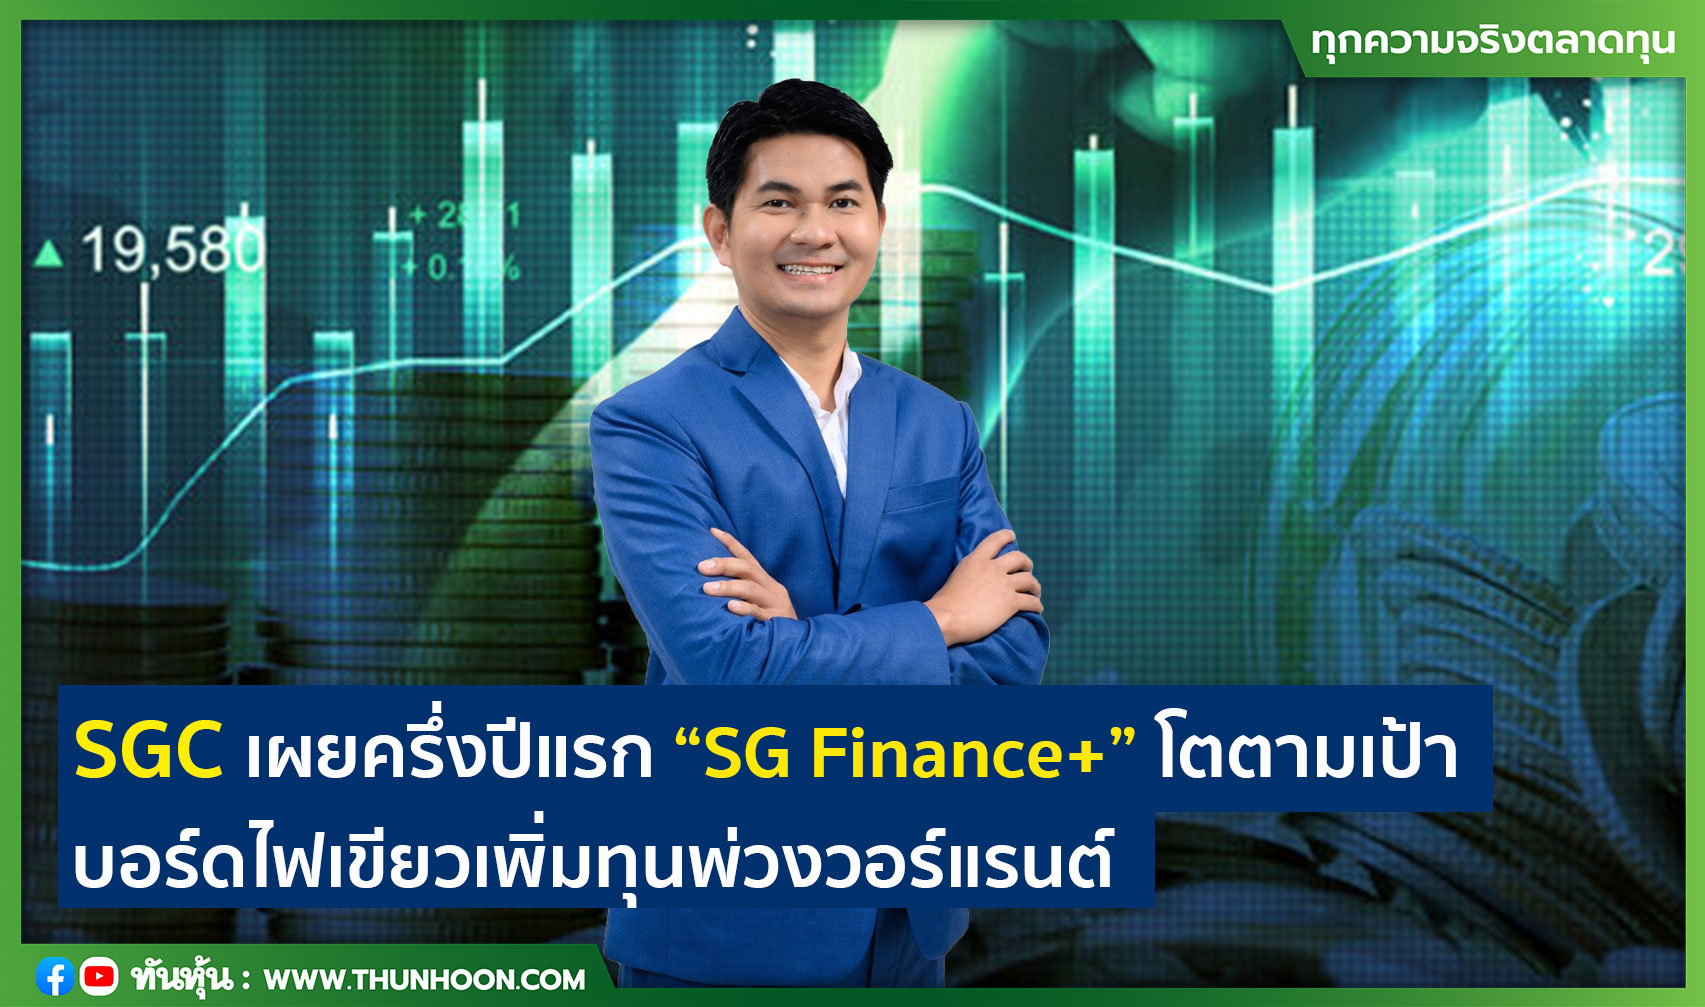 SGC เผยครึ่งปีแรก “SG Finance+” โตตามเป้า บอร์ดไฟเขียวเพิ่มทุนพว่งวอร์แรนต์